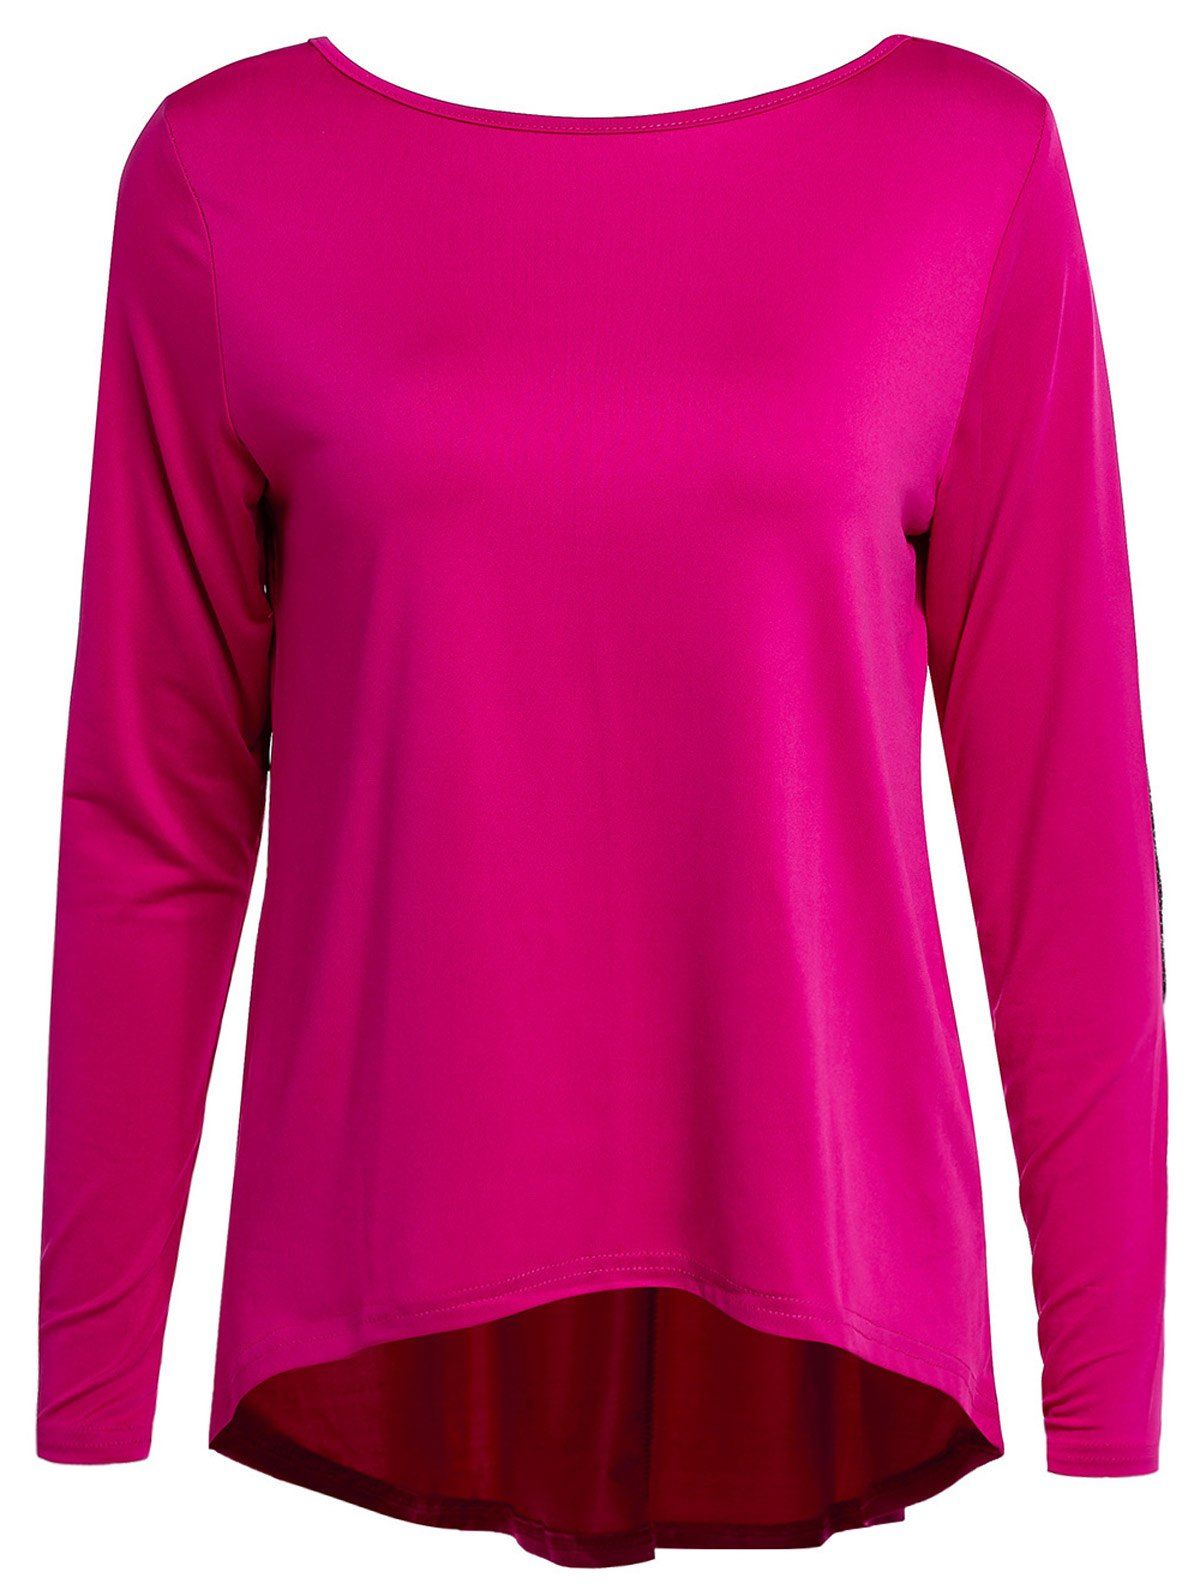 Graceful Jewel Neck Sequin Splicing Long Sleeve Blouse For Women - ROSE M